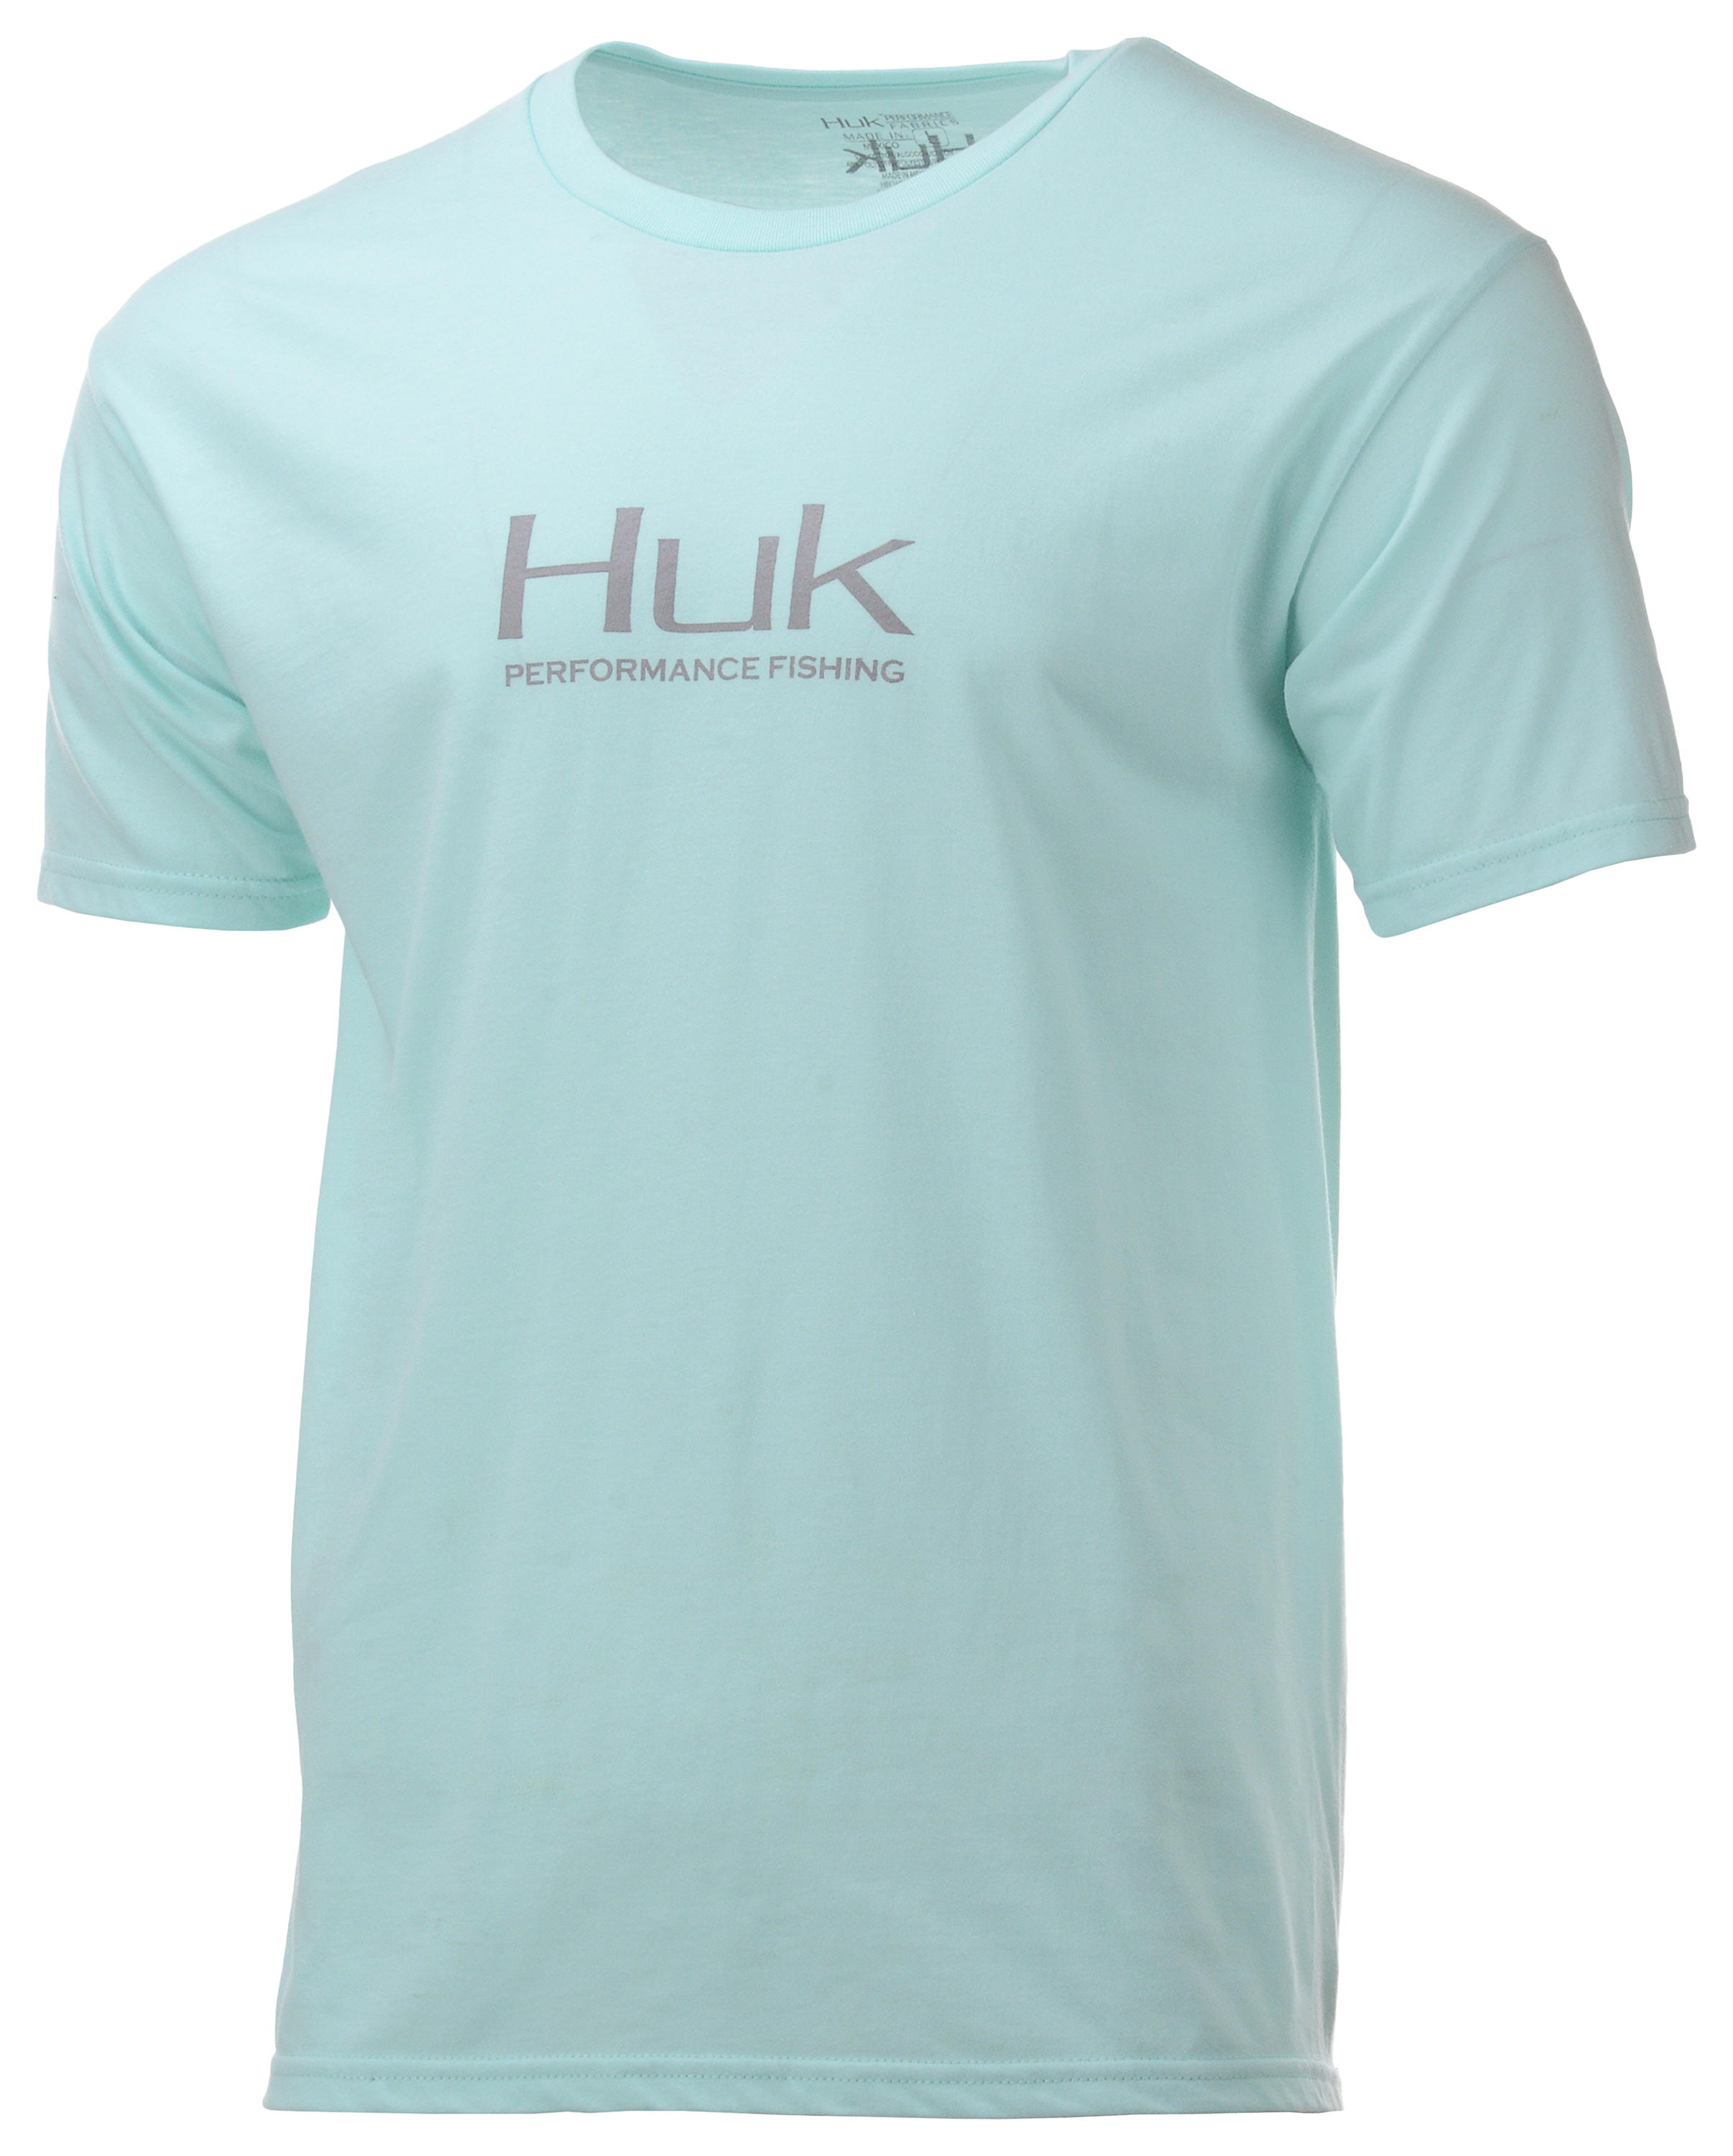 Huk Performance Fishing T-Shirt for Men